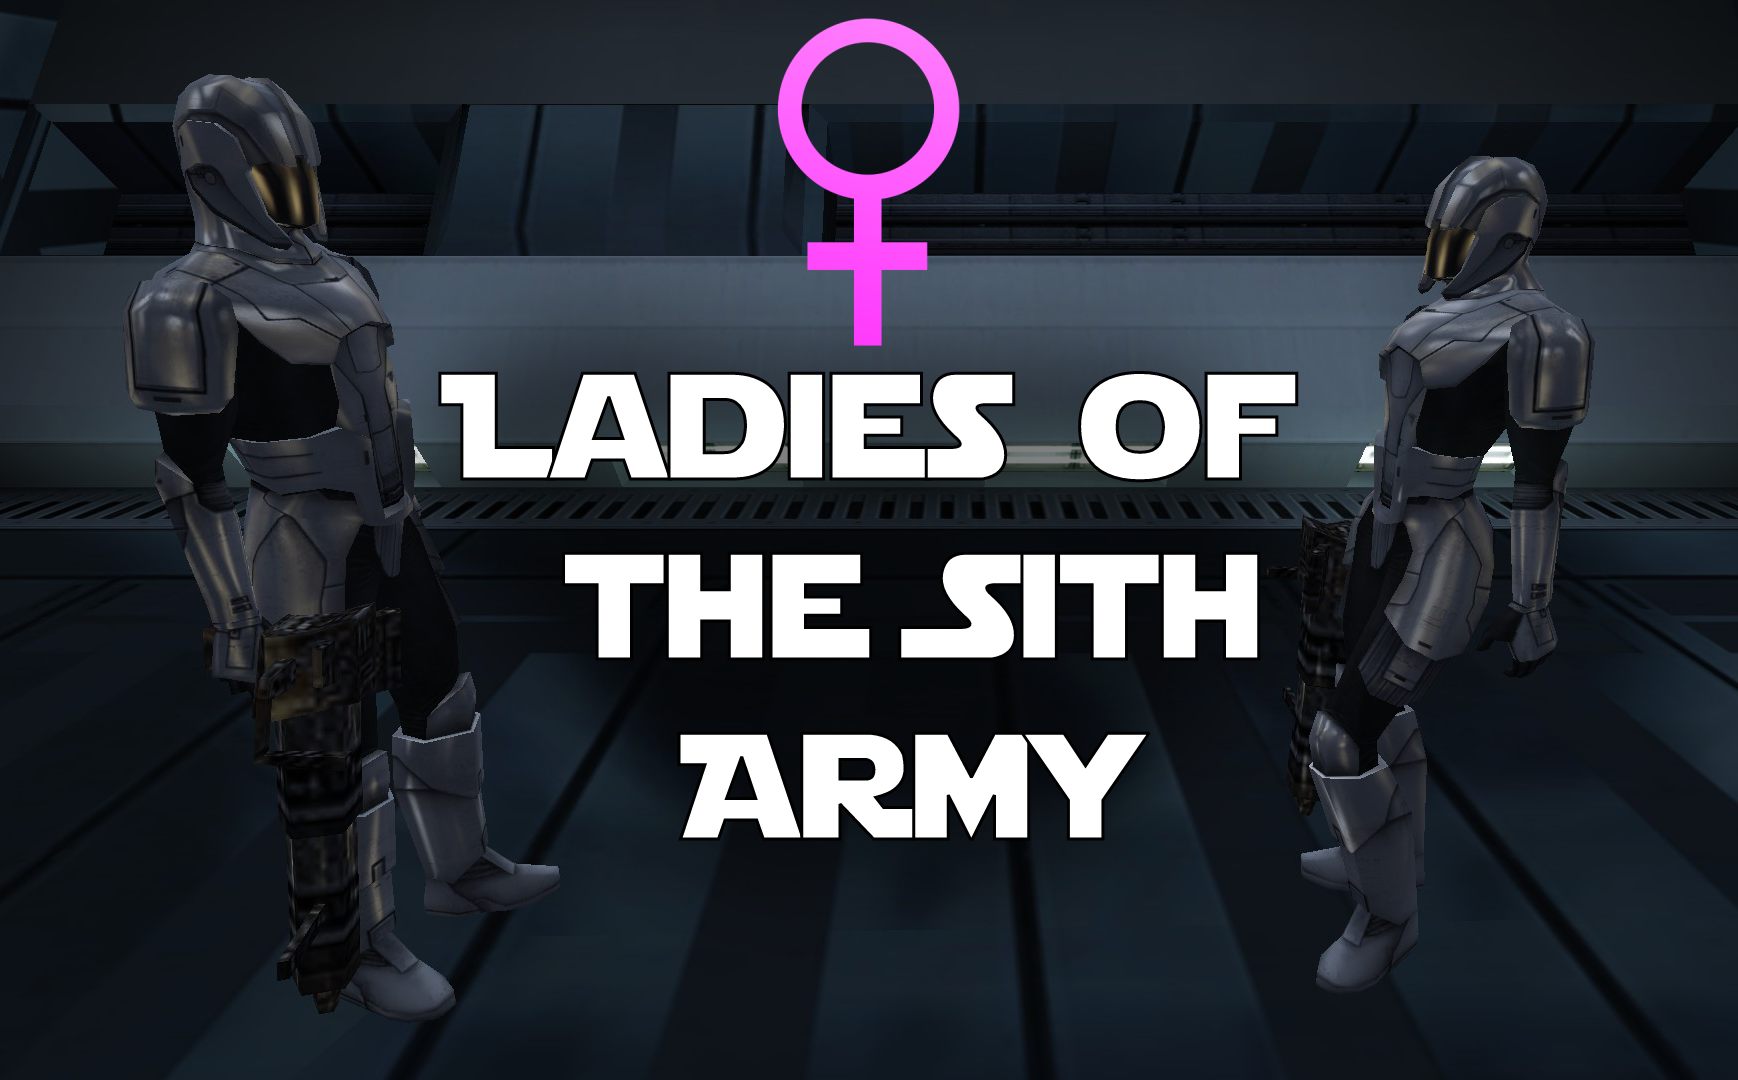 Female sith trooper